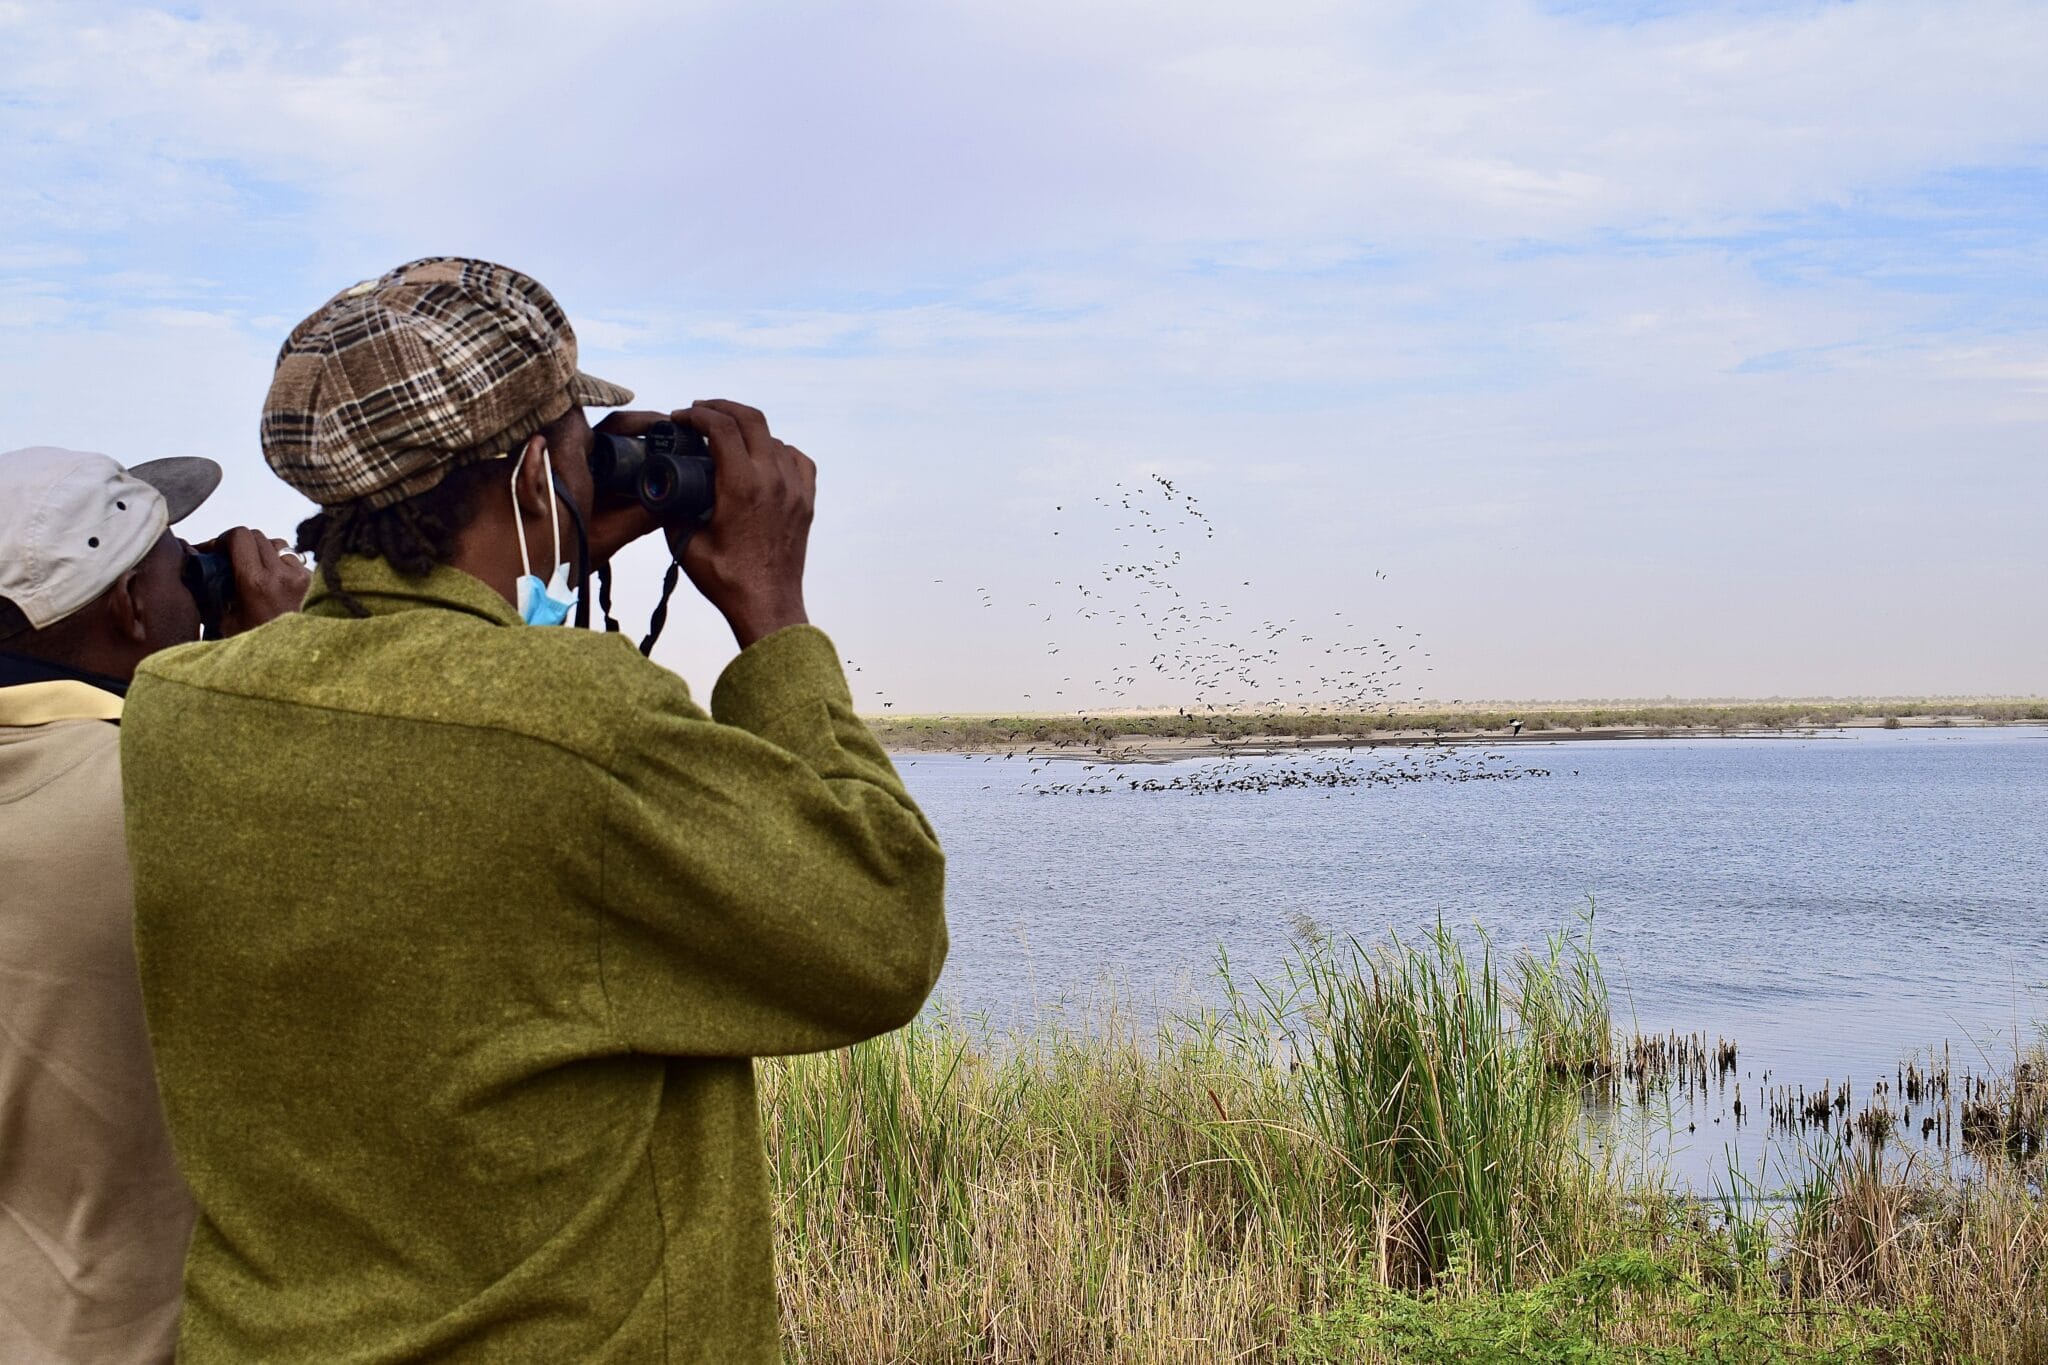 Two people holding binoculars watch a flock of birds landing on a body of water. 